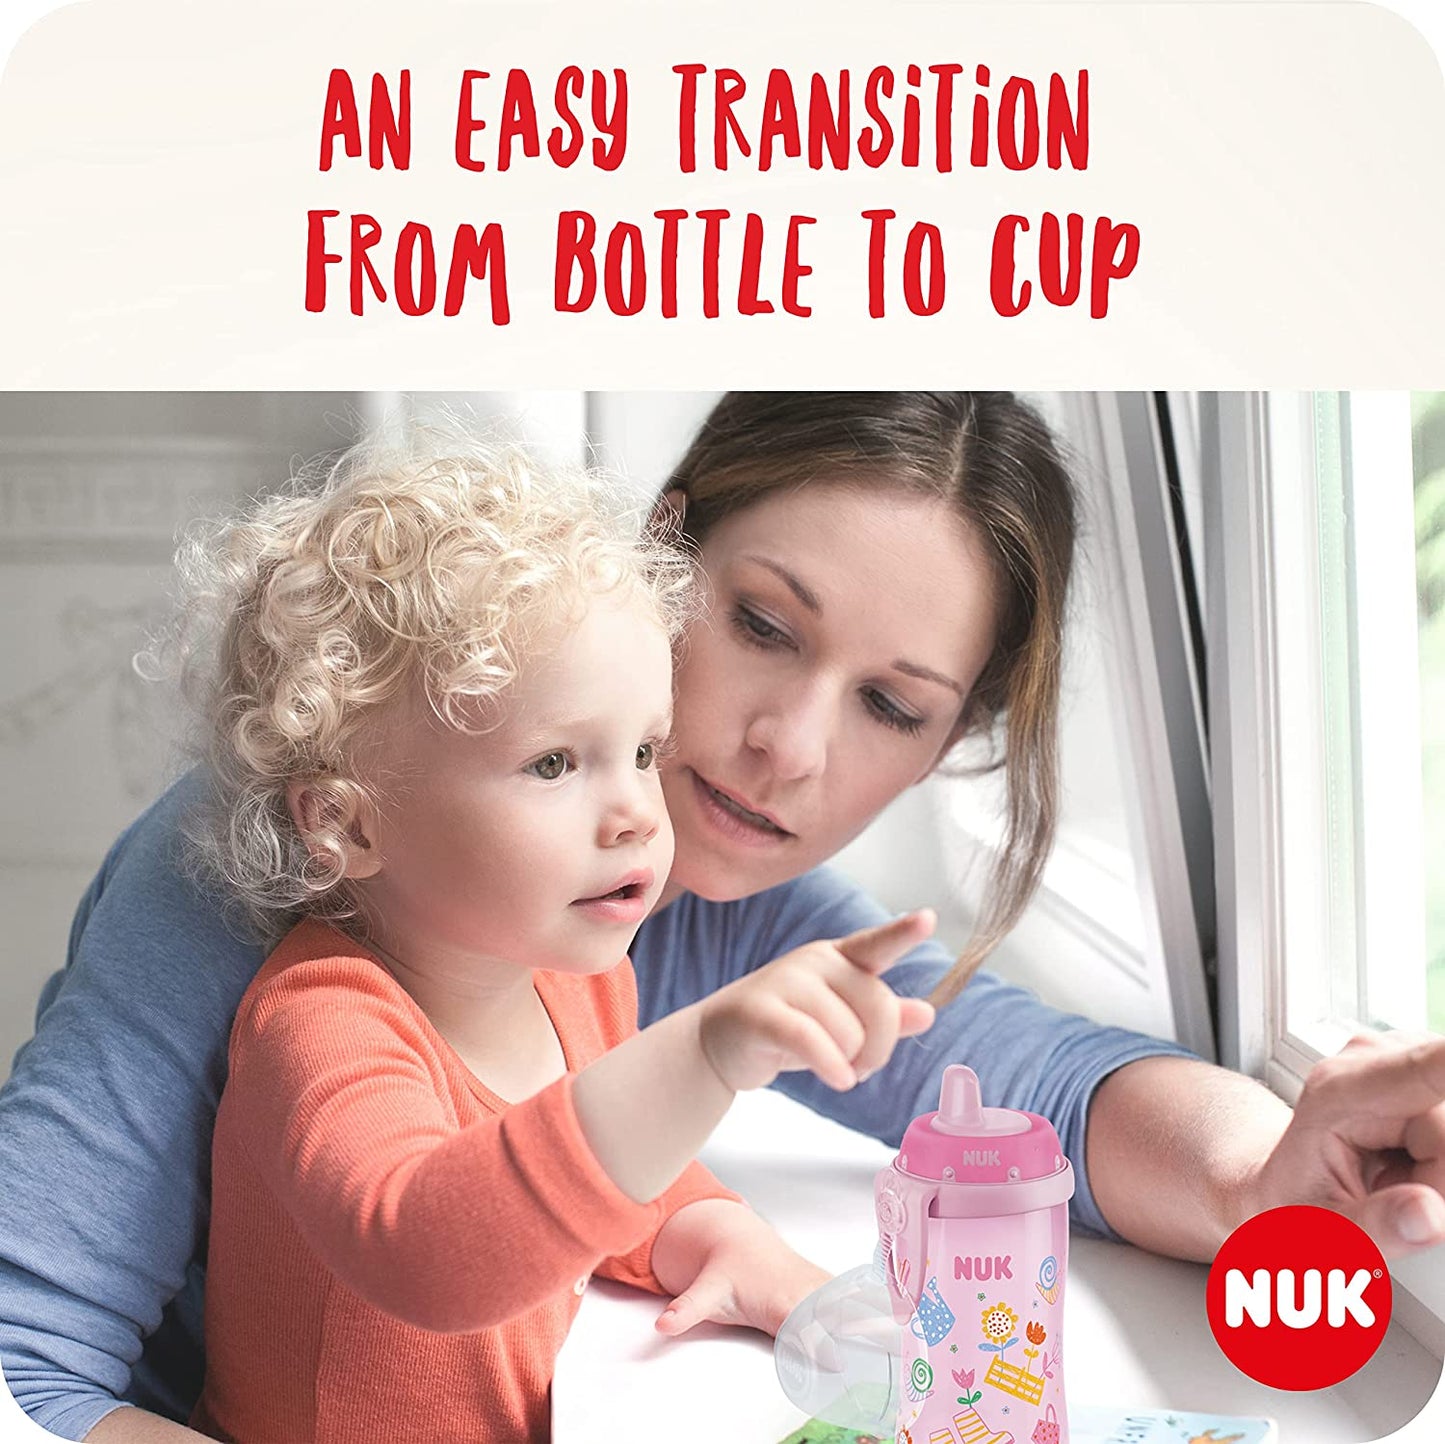 NUK Kiddy Cup Night Toddler Cup | 12+ Meses | 300ml | Bico temperado à prova de vazamento | brilha no escuro | Clipe e tampa protetora | Livre de BPA | Azul